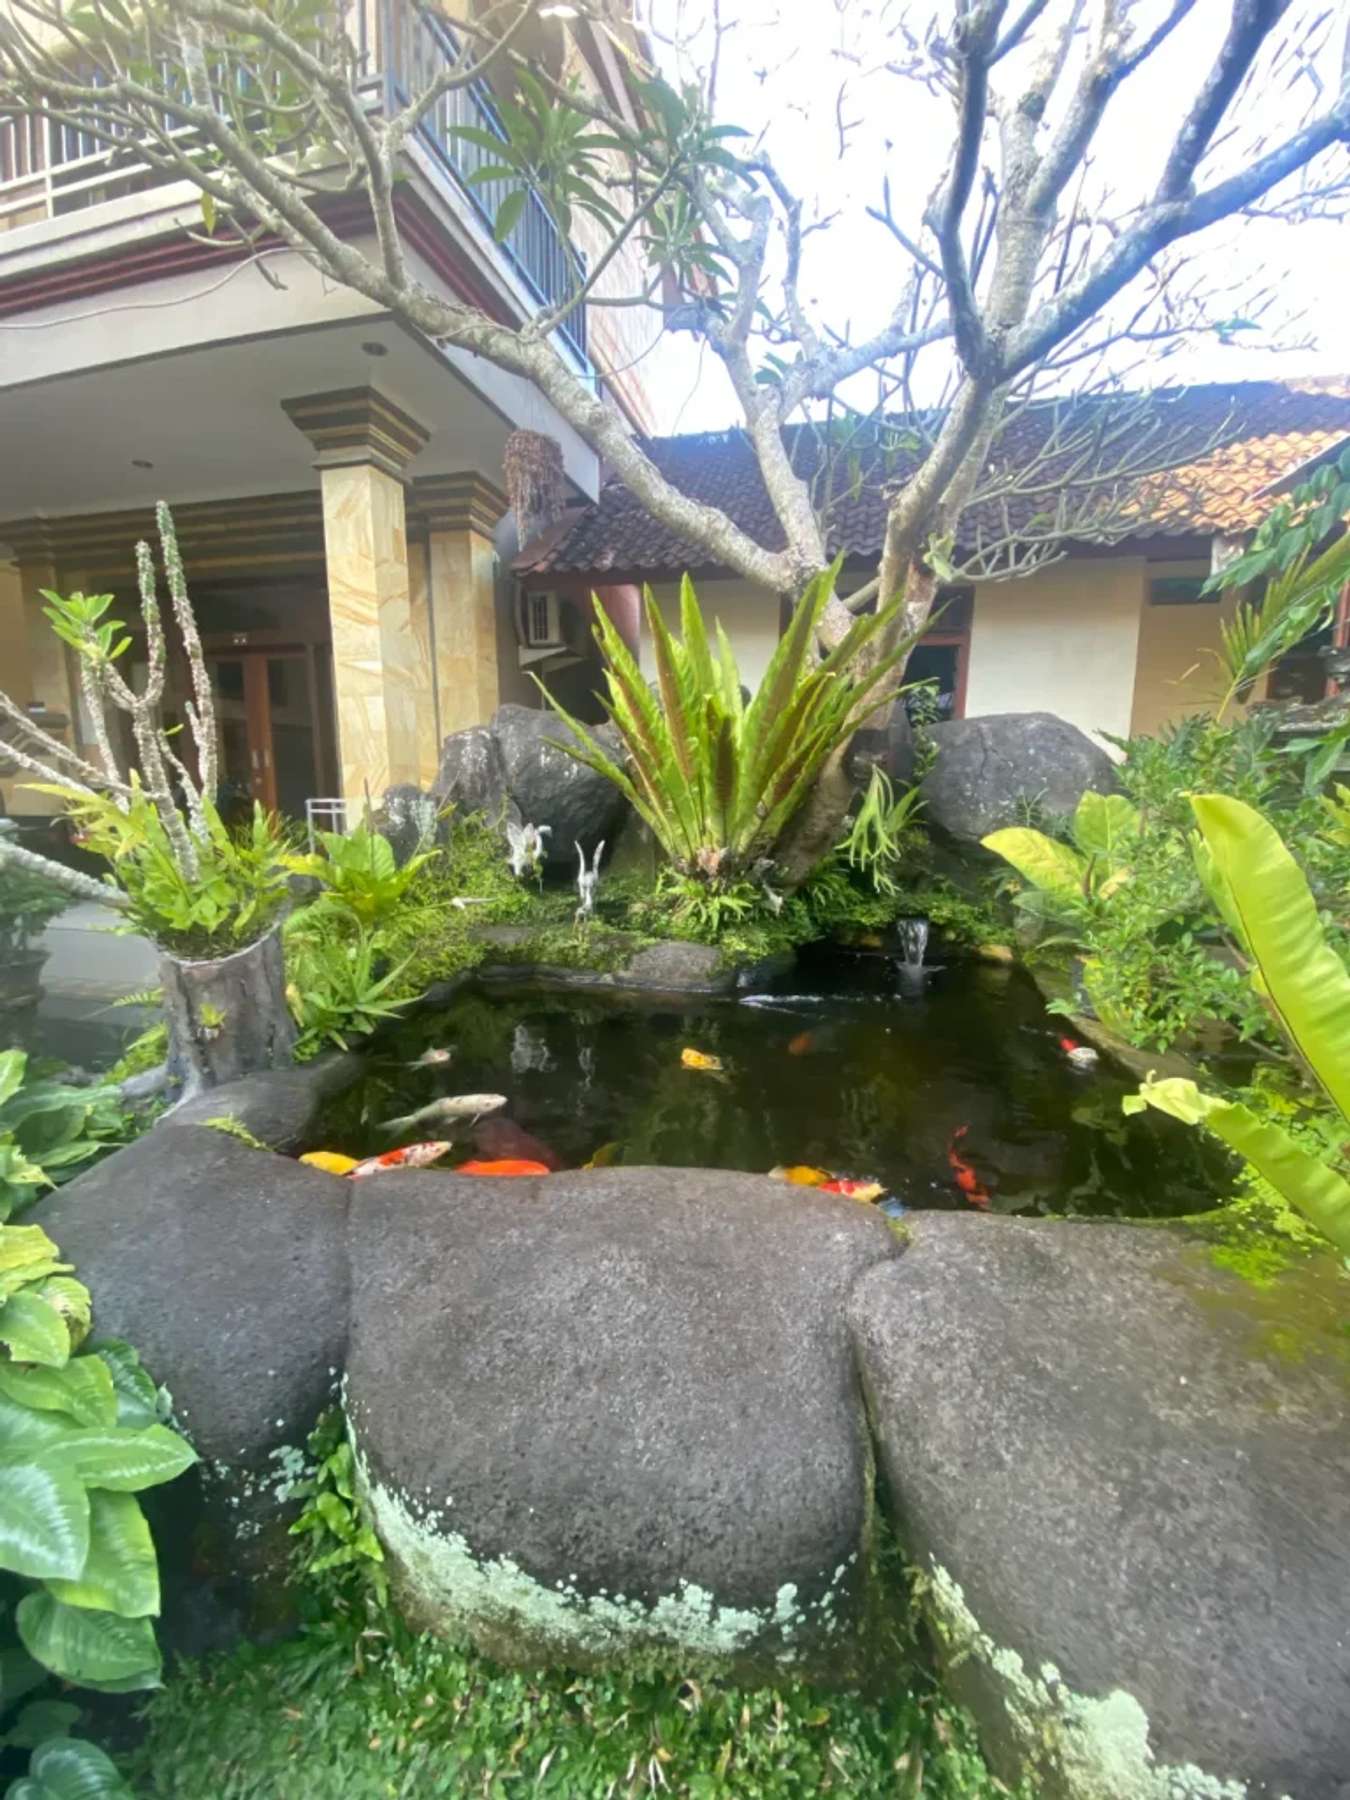 Jepun Bali Ubud Homestay